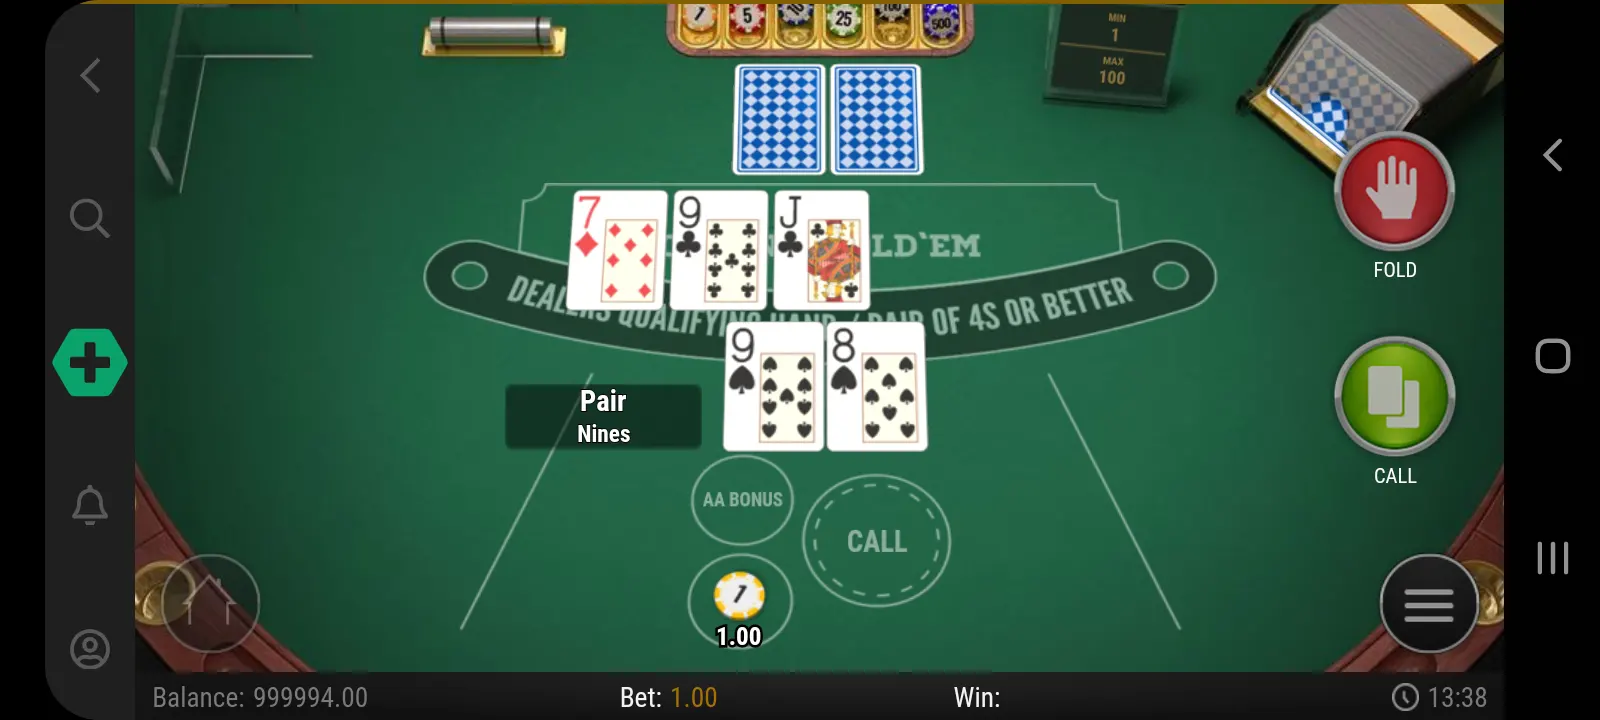 Energy casino app screenshot 4